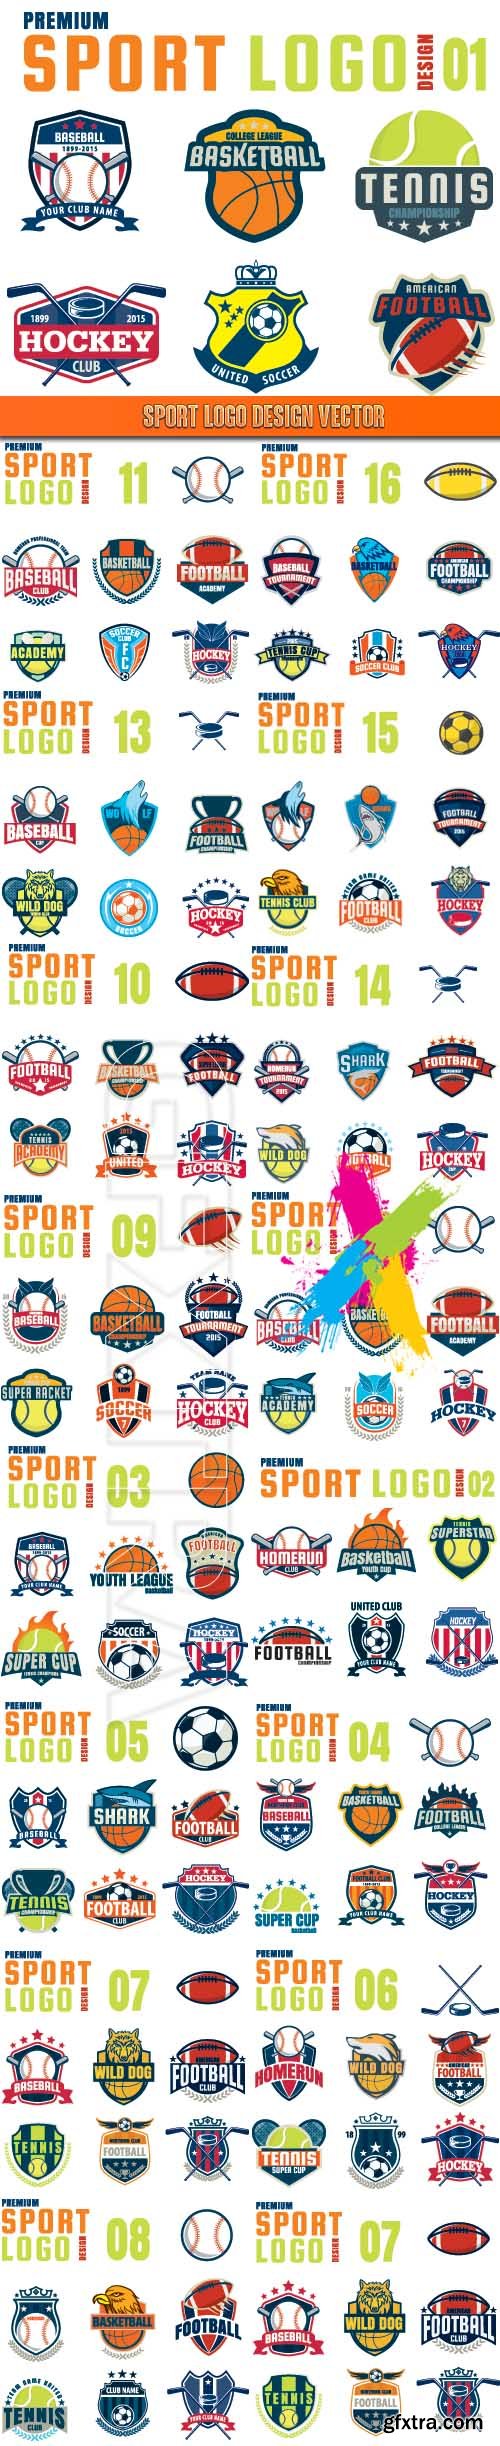 Sport logo design vector